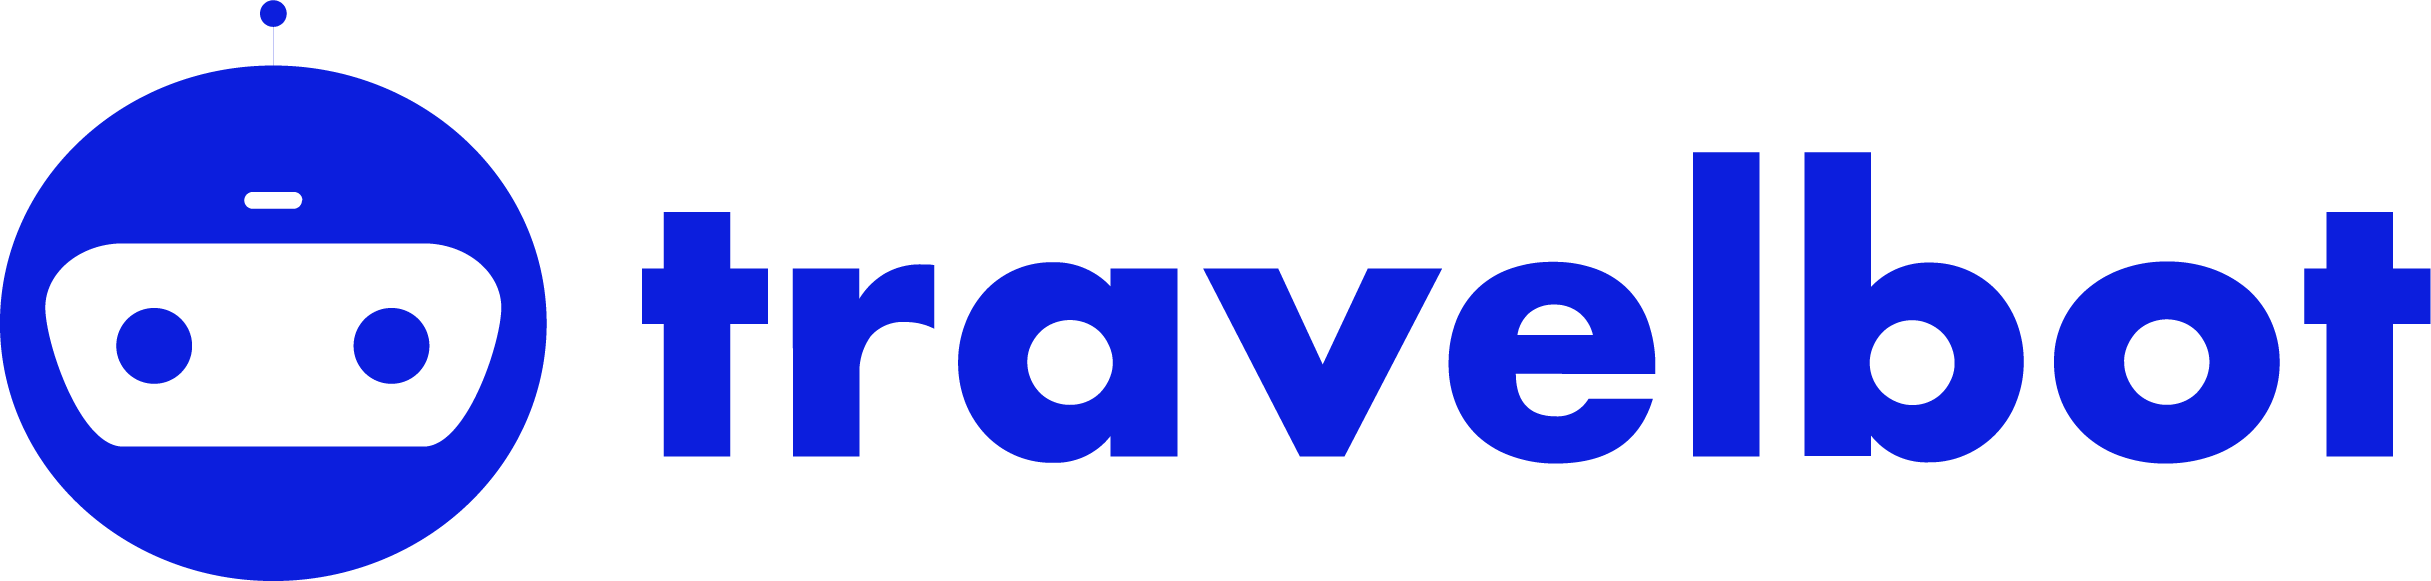 Equipo Travelbot logo